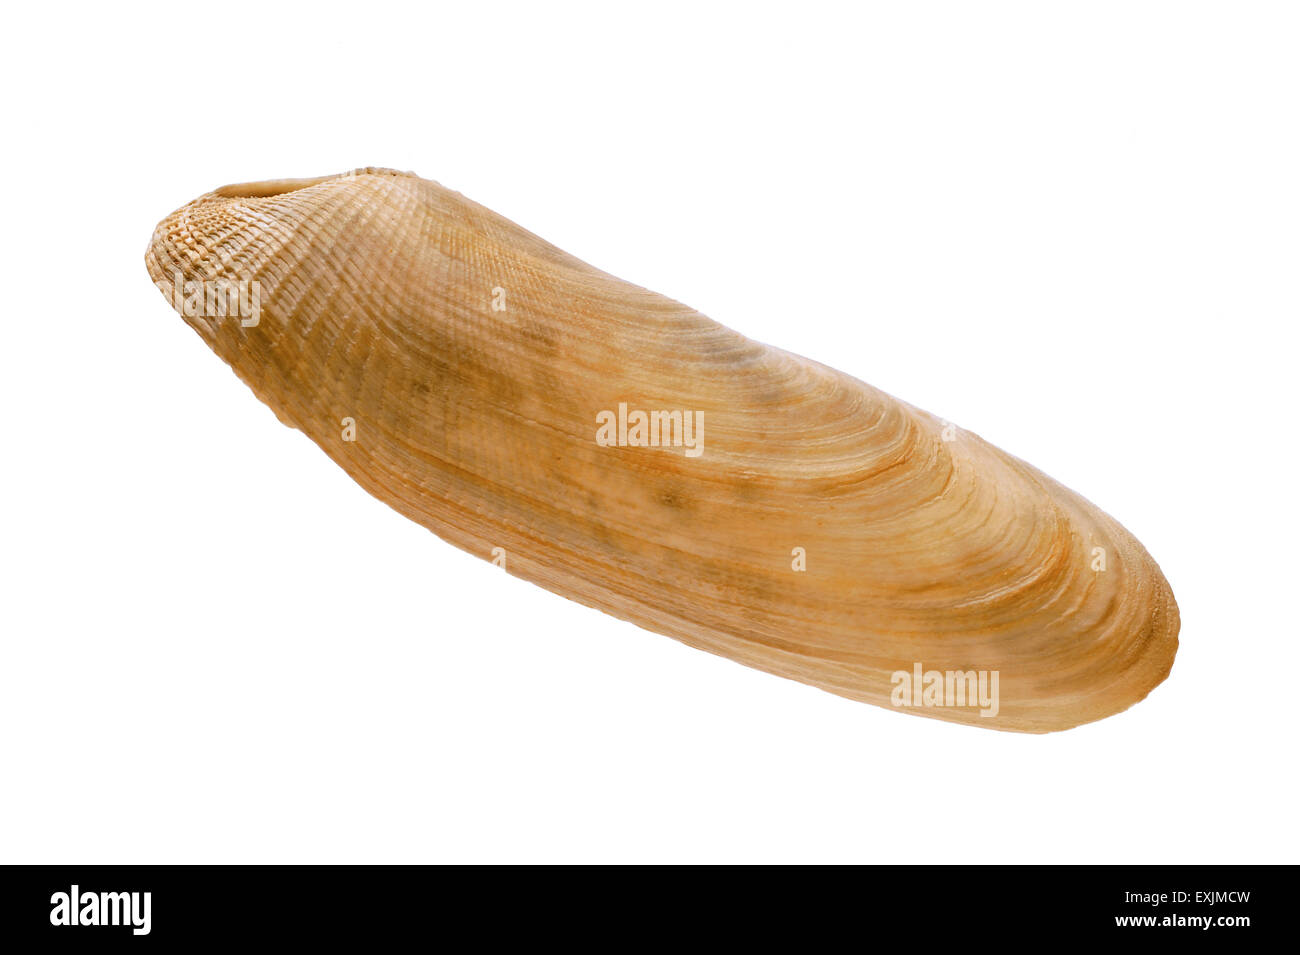 Common piddock (Pholas dactylus) shell on white background Stock Photo